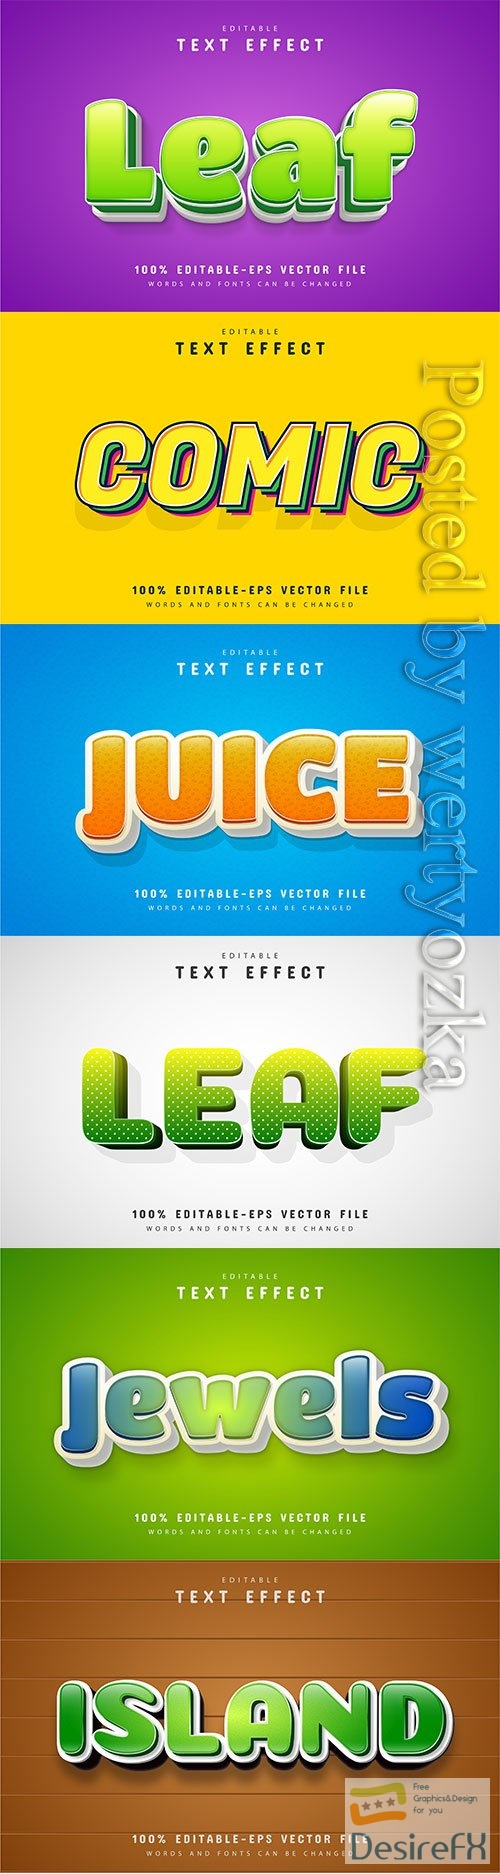 3d editable text style effect vector vol 406